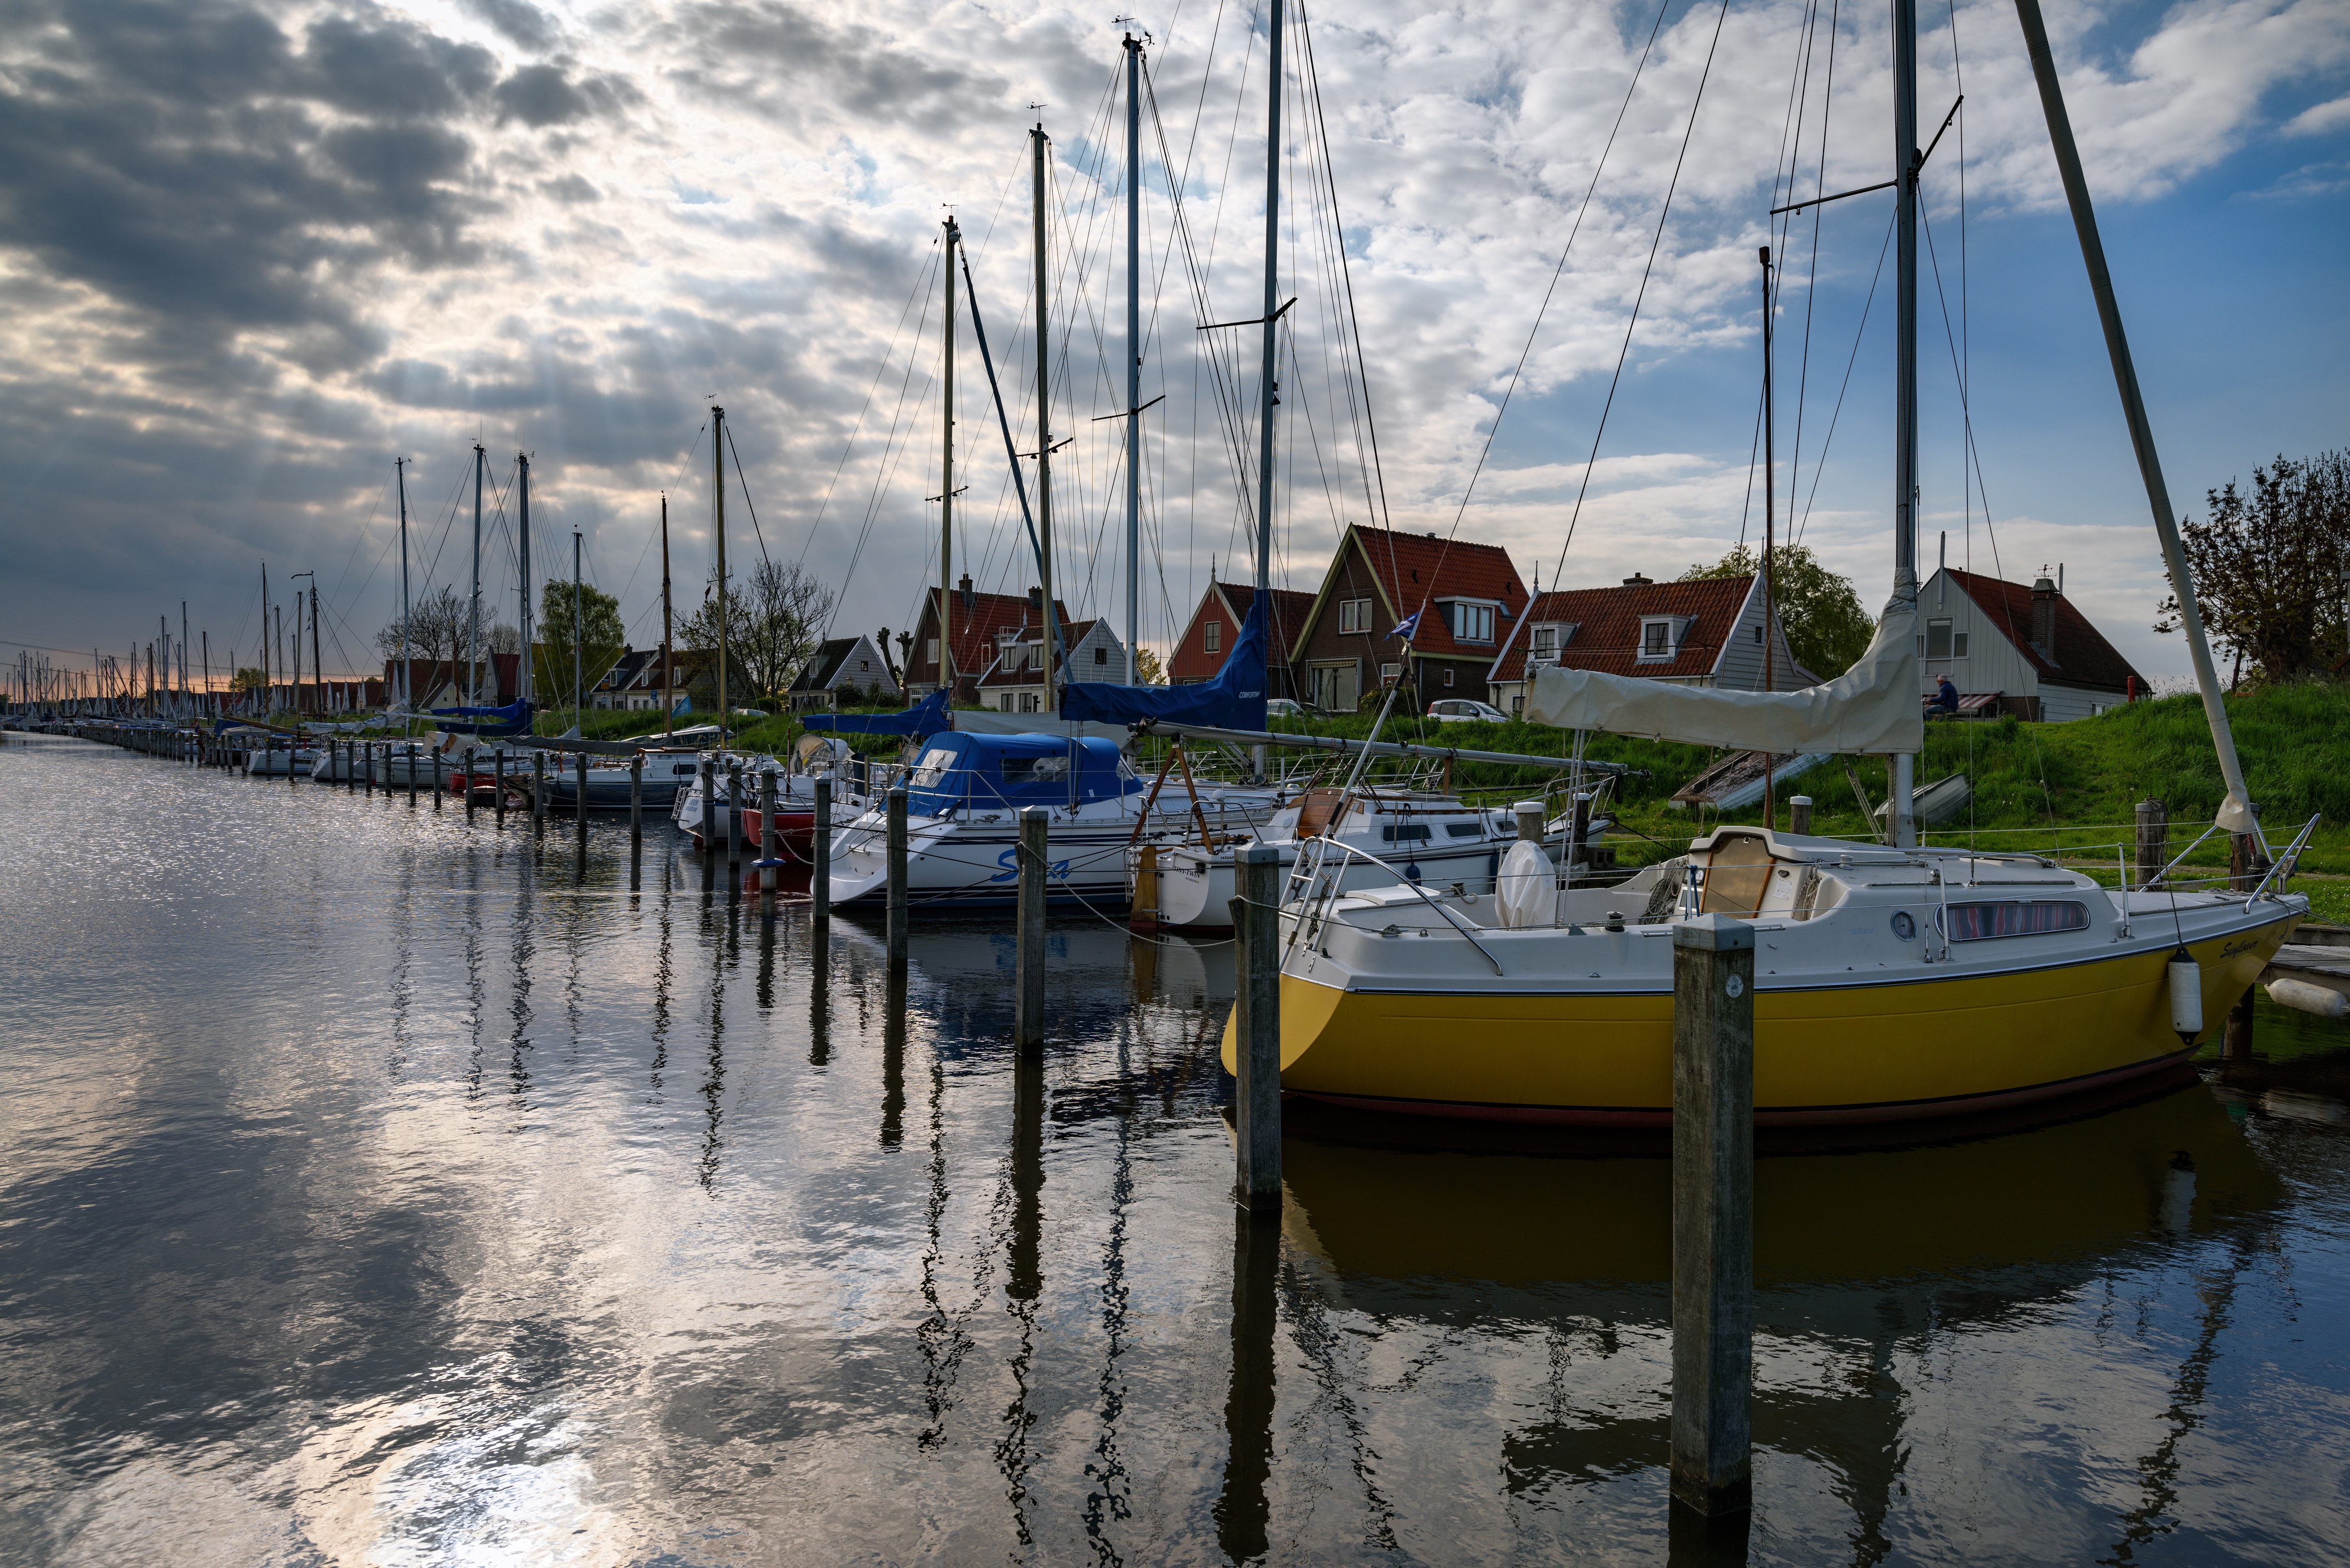 От двух причалов на реке. Парусная яхта Нидерланды. Яхта Амстердам парусная. Ладожские шхеры на яхте.